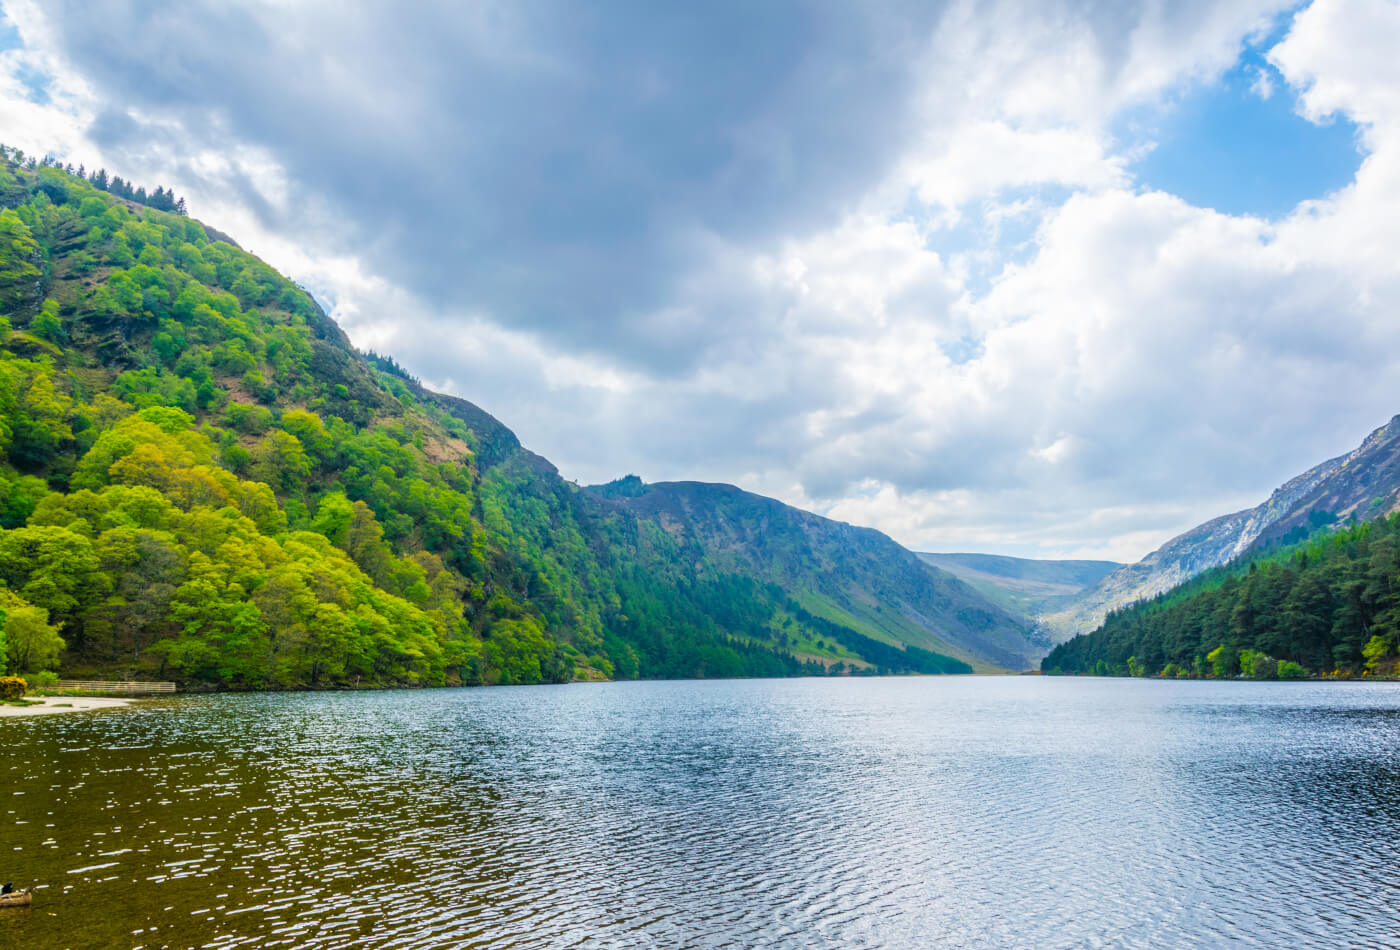 Lake with backdrop of mountains at Irish National Park